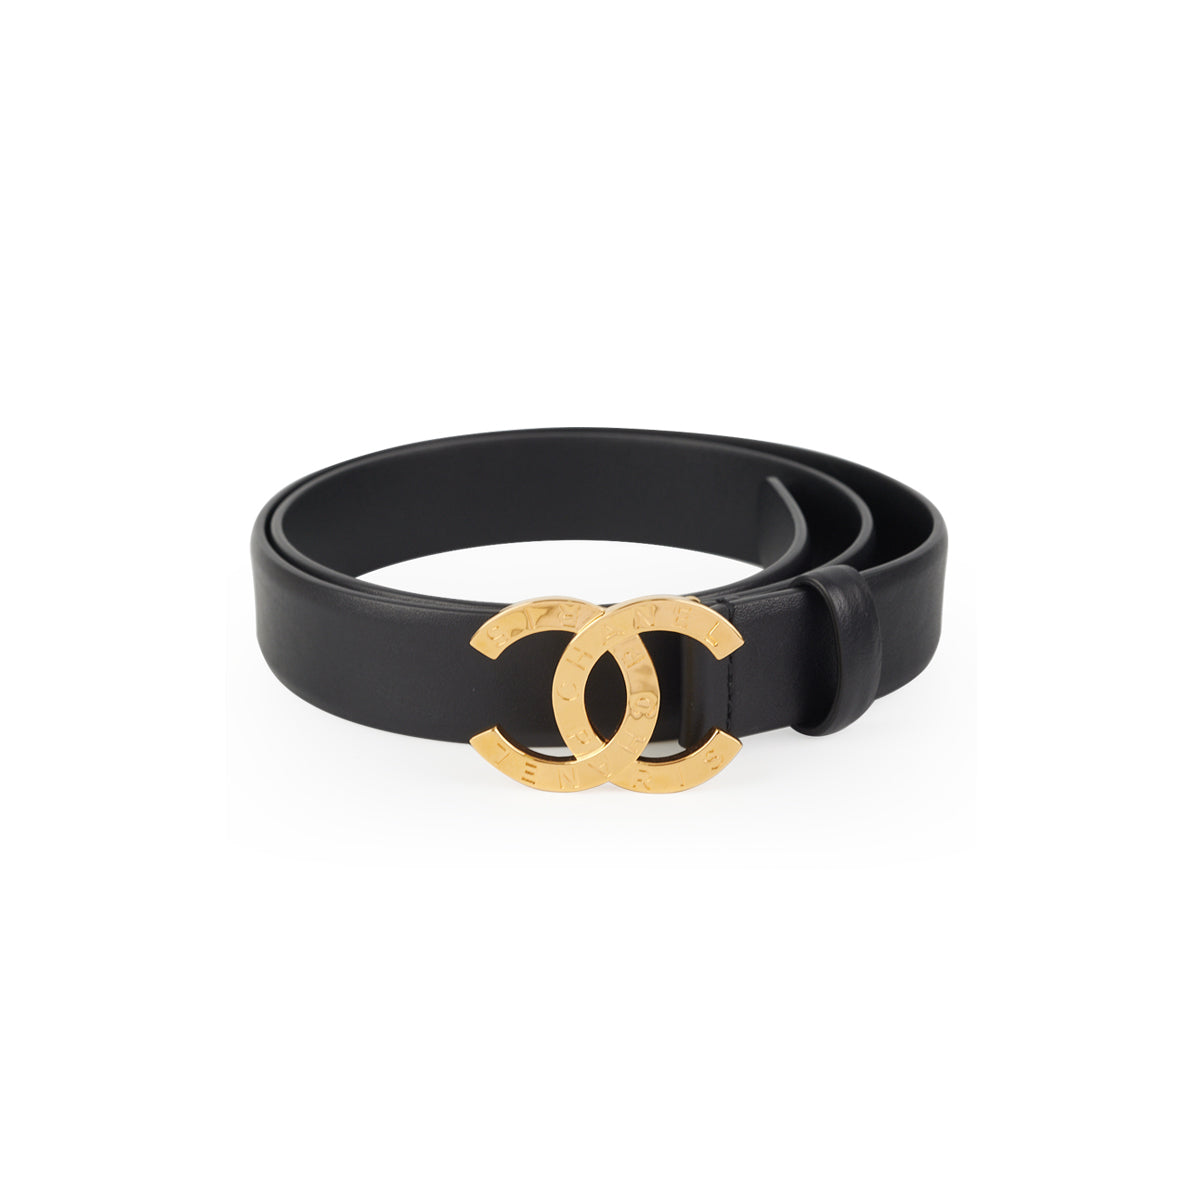 Chanel Gold Cc Belt - Size 75 - The Purse Affair